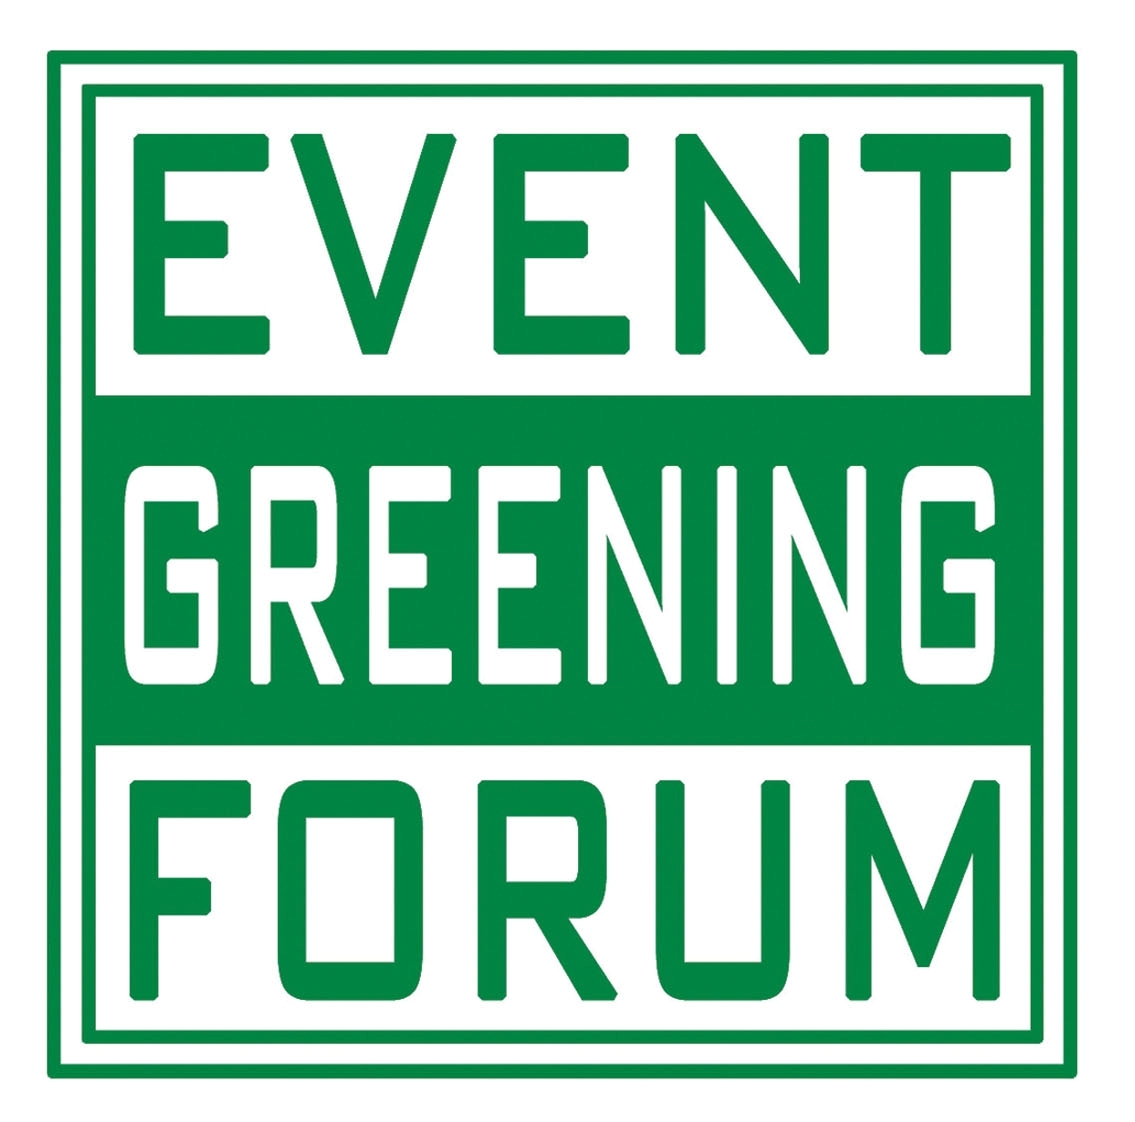 Event Greening Form